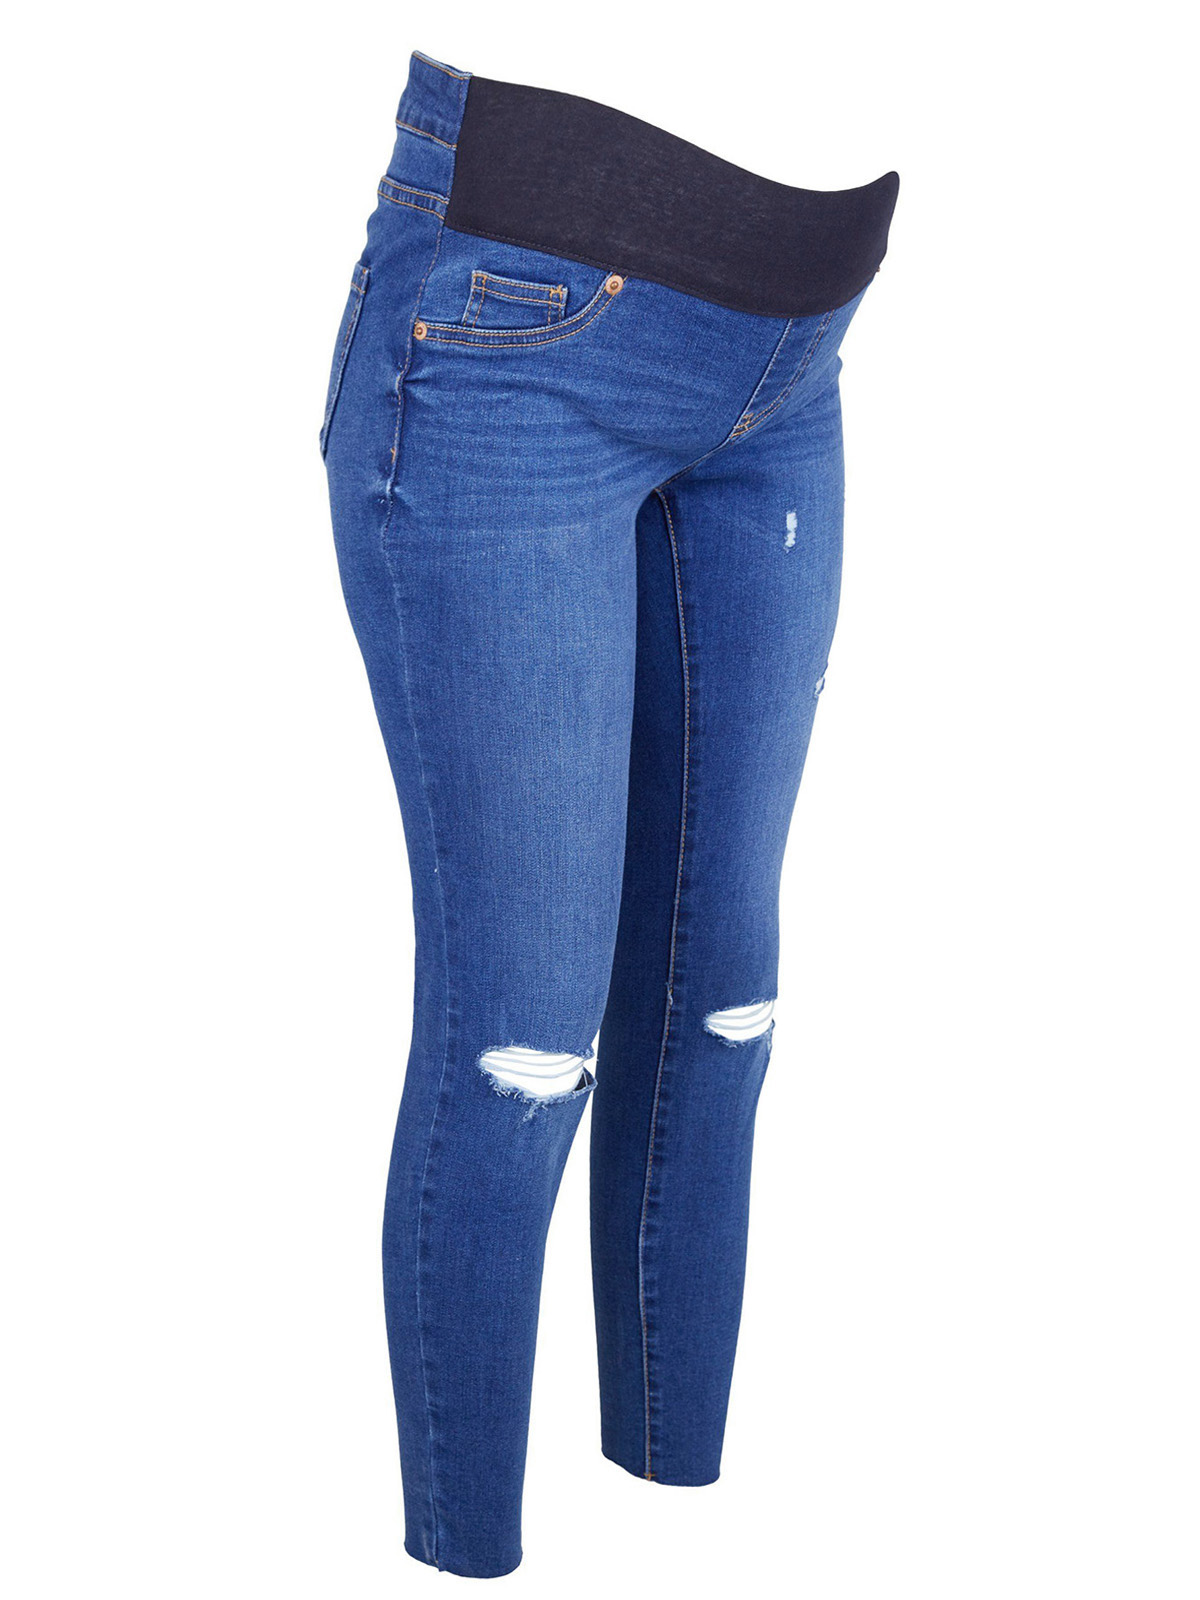 N3W L00K BLUE Jenna Ripped Under Bump Skinny Jeans - Size 8 to 20 ...